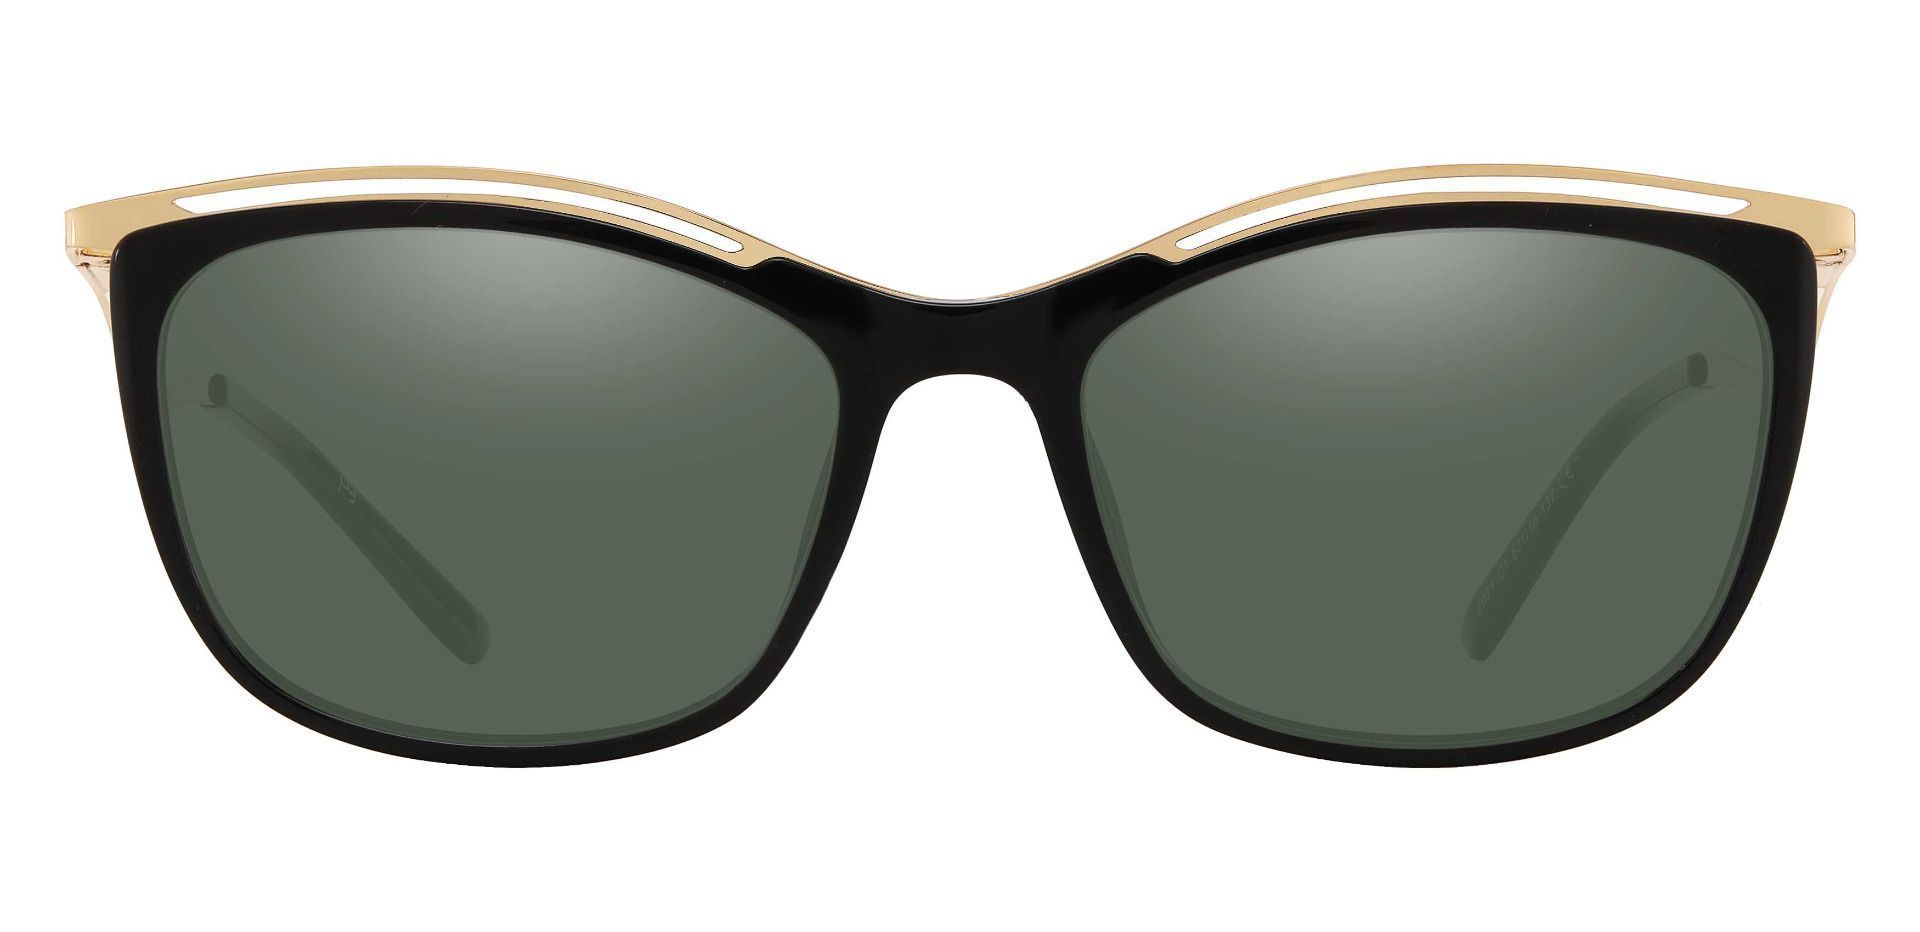 Enola Cat Eye Reading Sunglasses - Black Frame With Green Lenses